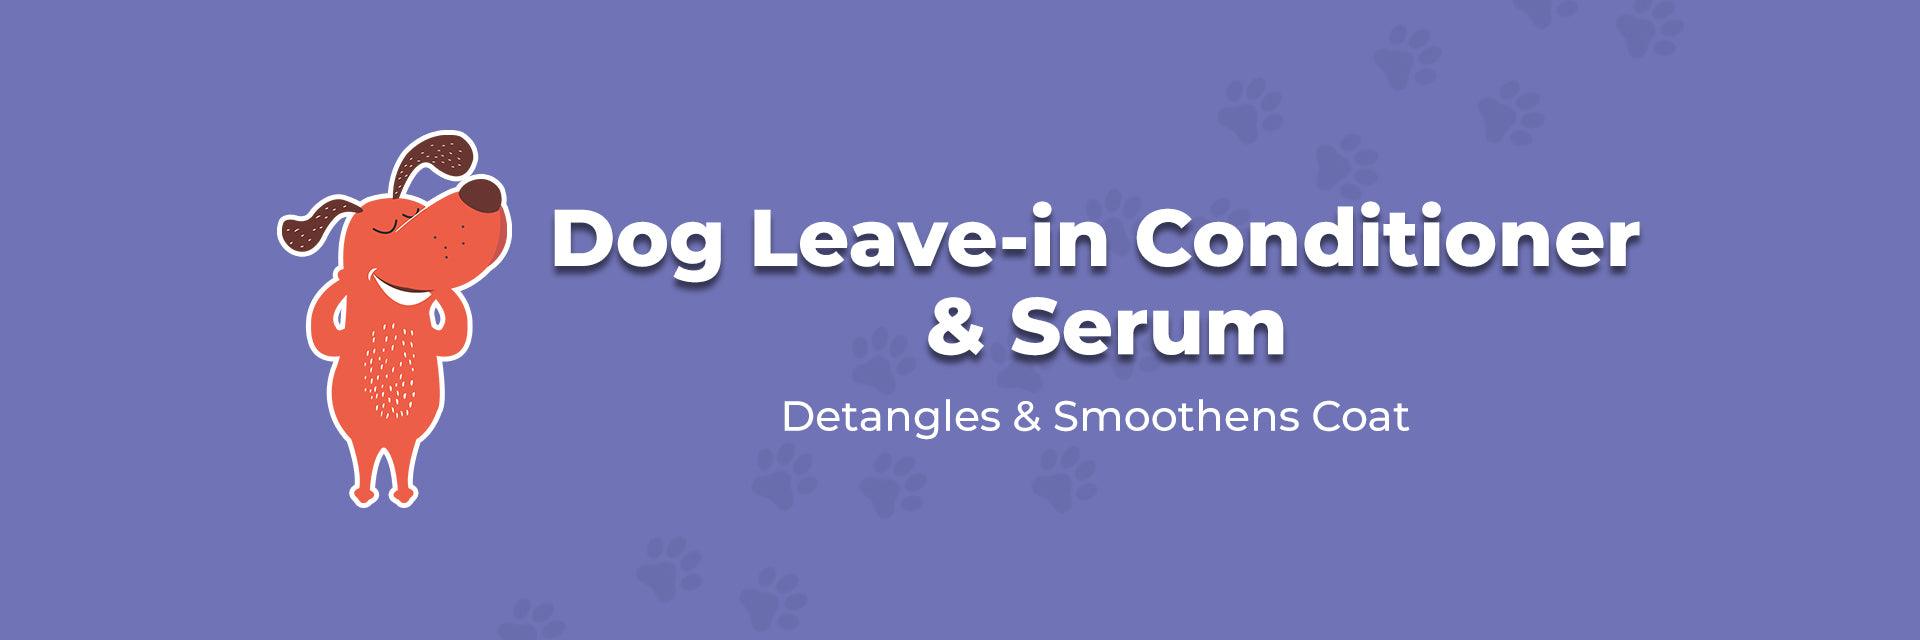 Dog Leave-in Conditioner & Serum - Captain Zack